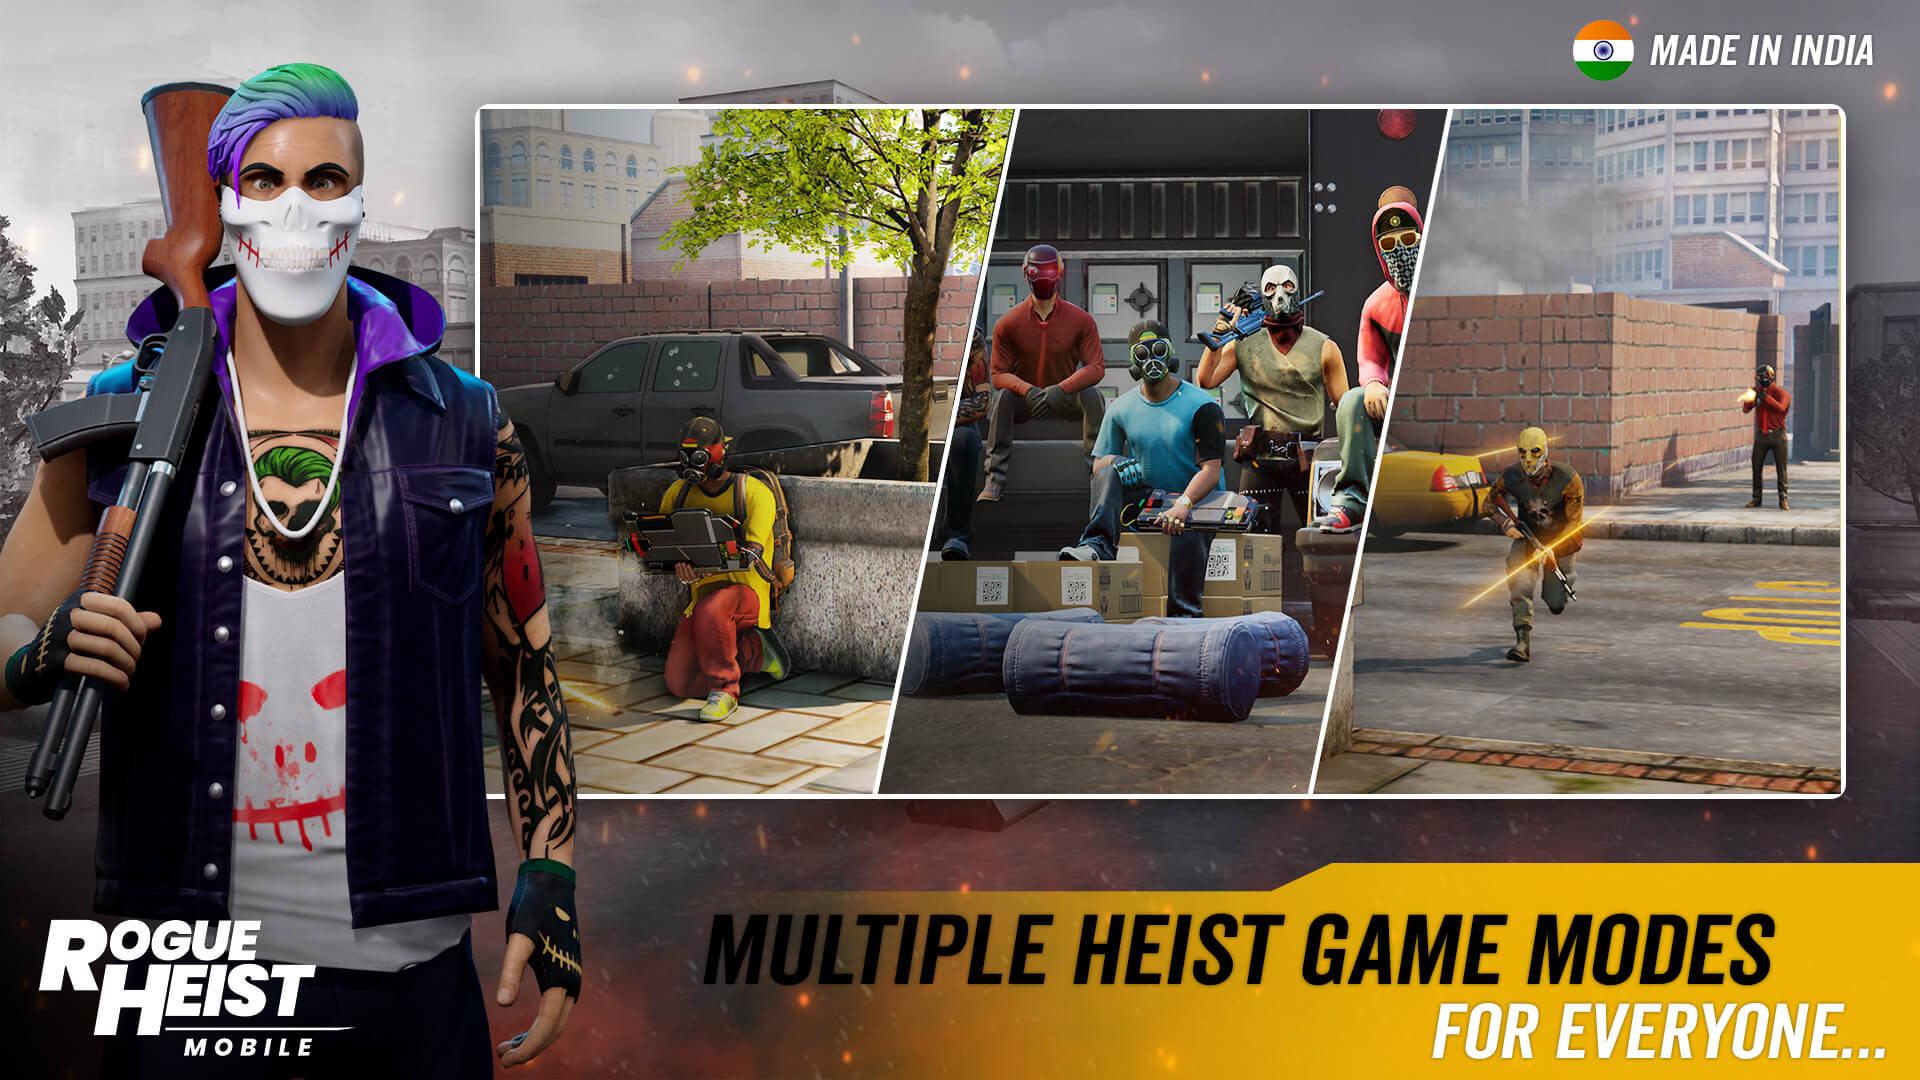 MPL Rogue Heist - India's 1st Shooter Game 1.42.0 Screenshot 1